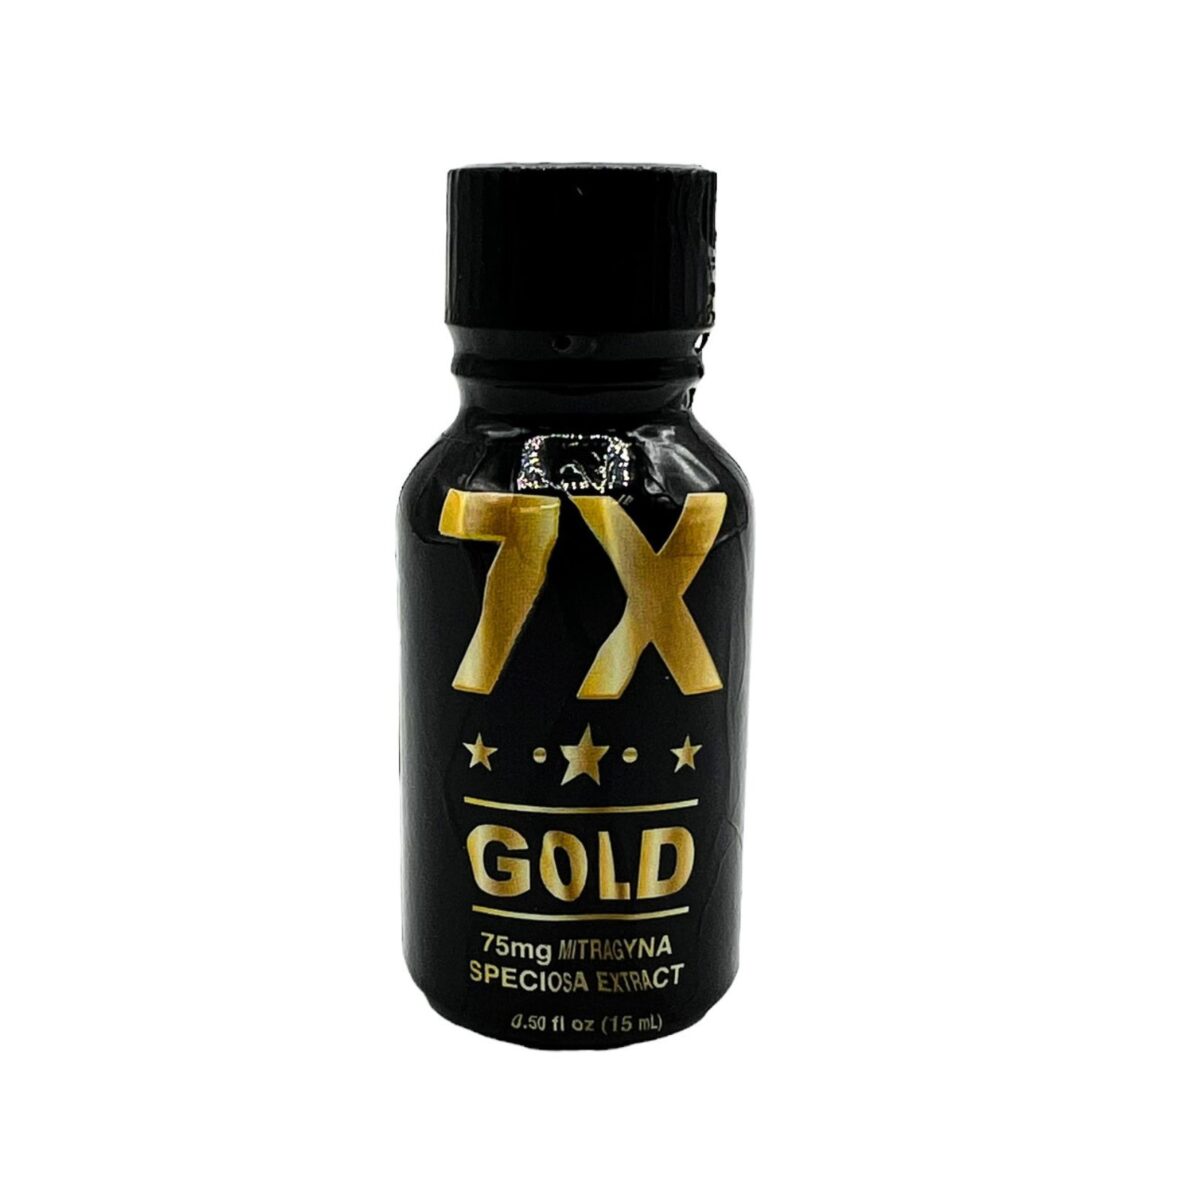 7X Gold Kratom Shot, 75mg – 15ml